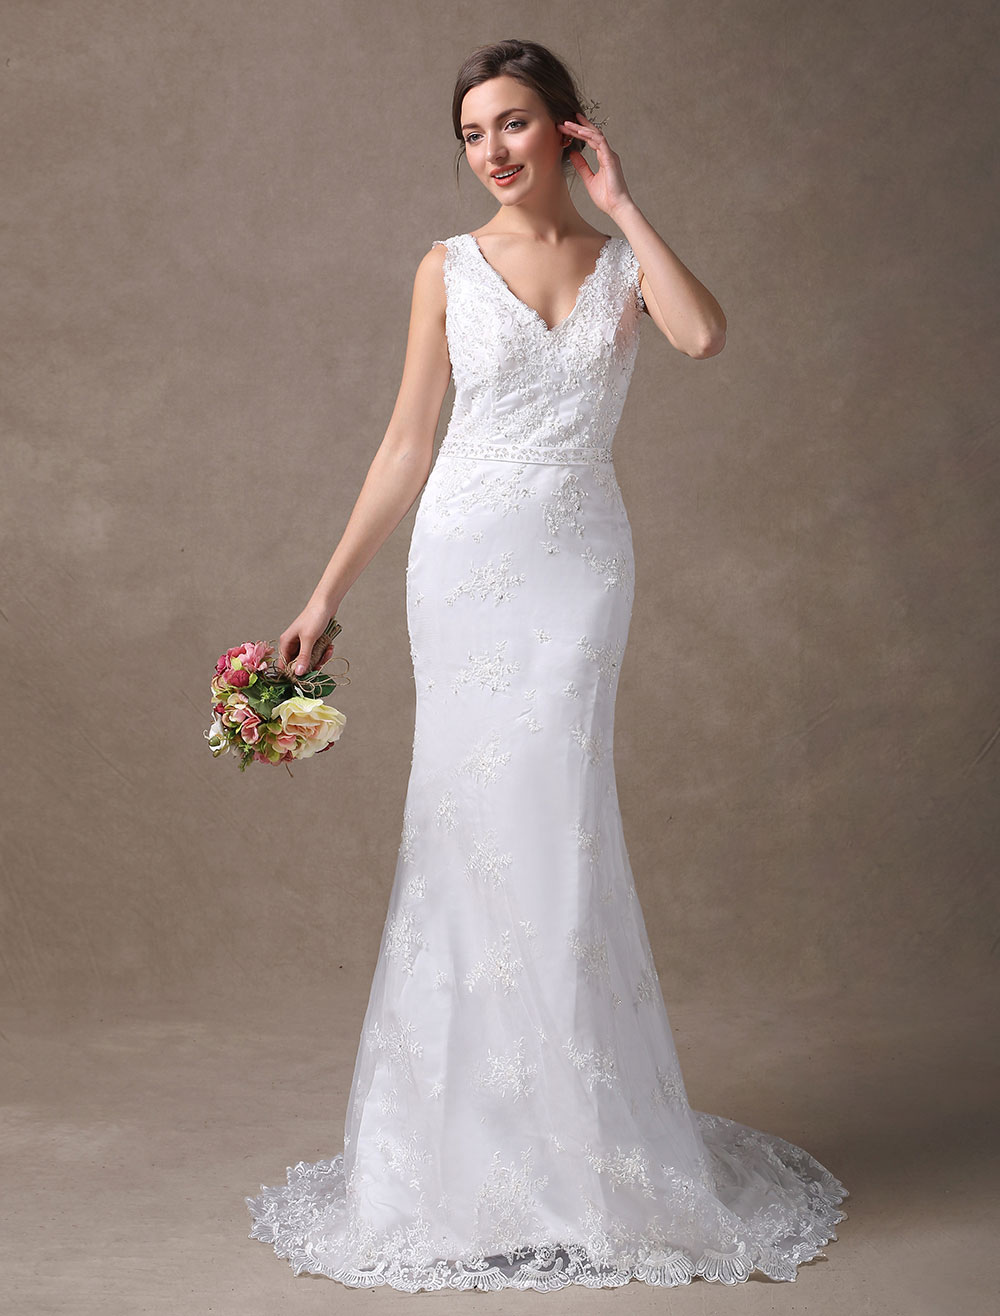 White Wedding Dresses Mermaid V Neck Lace Applique Beaded Bridal Dress With Train 